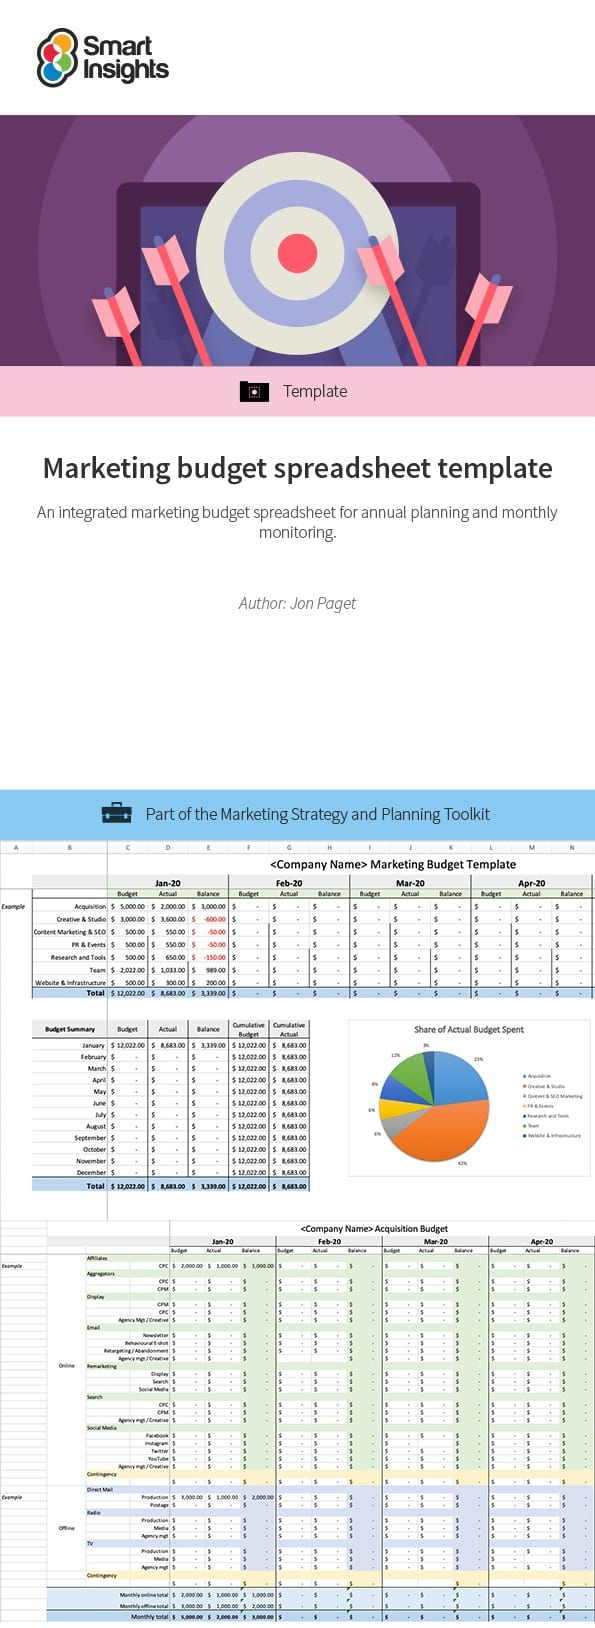 Marketing budget spreadsheet template  Smart Insights Inside Content Marketing Budget Template With Content Marketing Budget Template